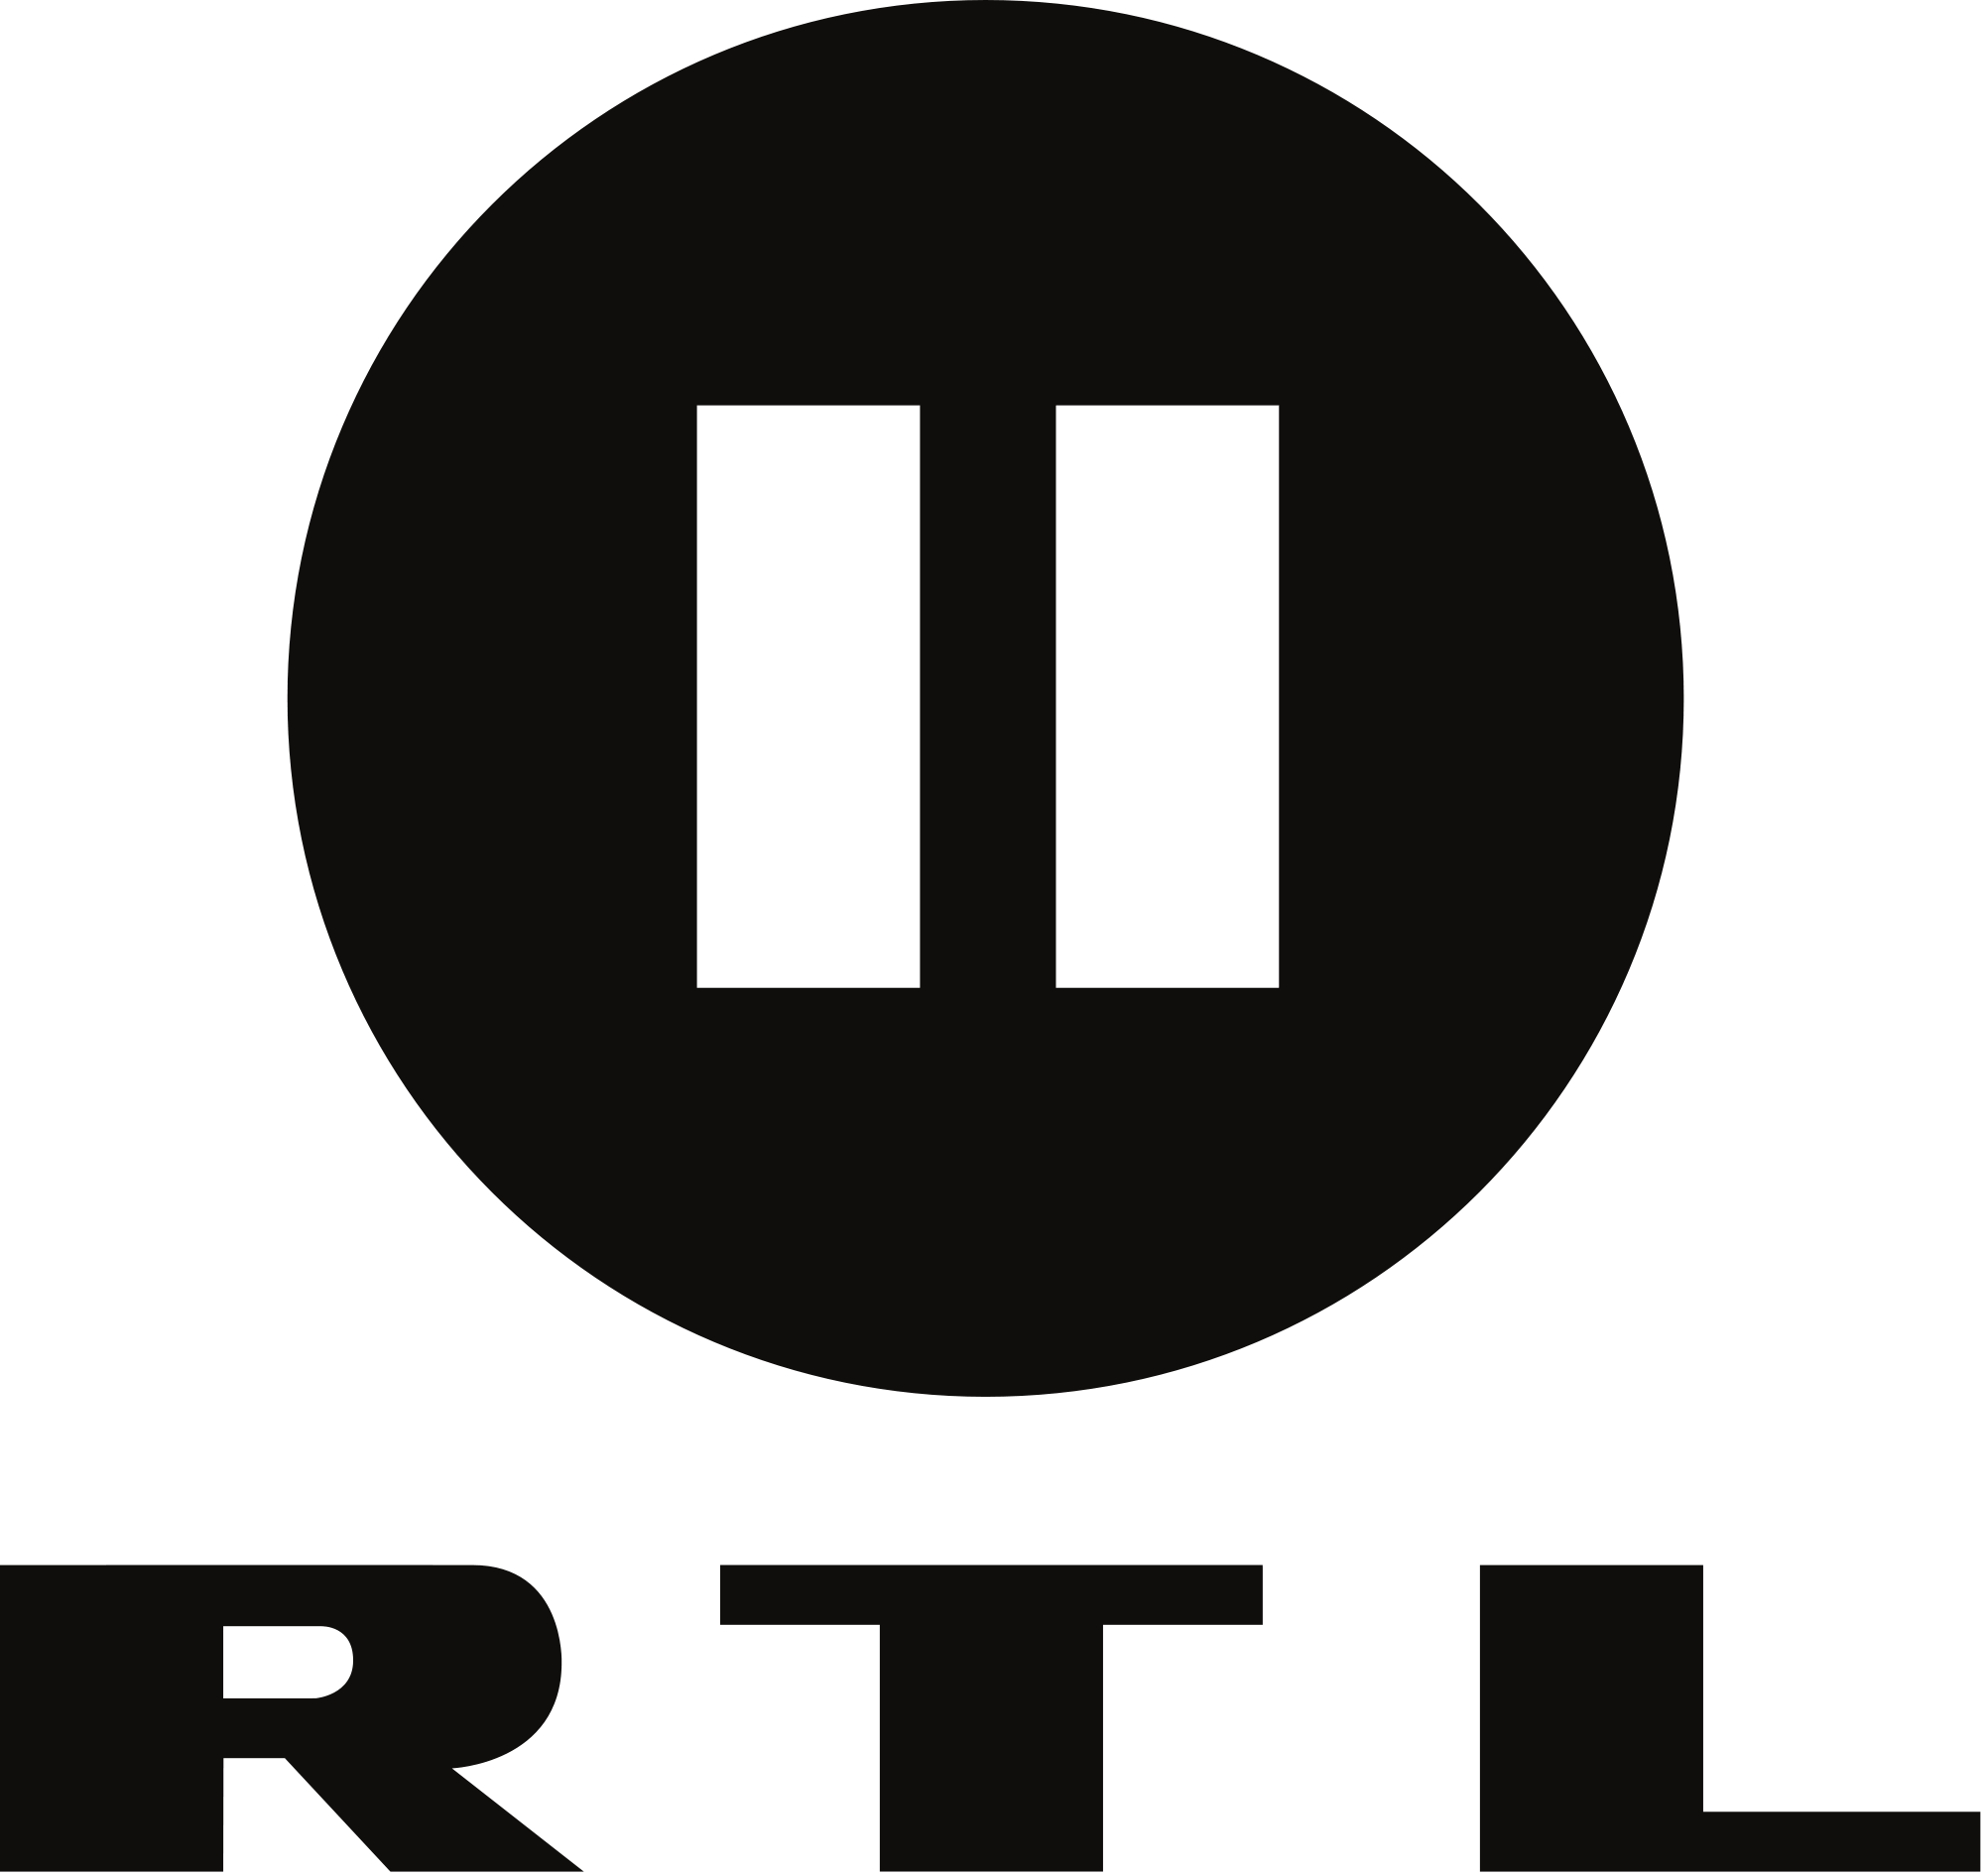 II Logo - RTL II Logo transparent PNG - StickPNG